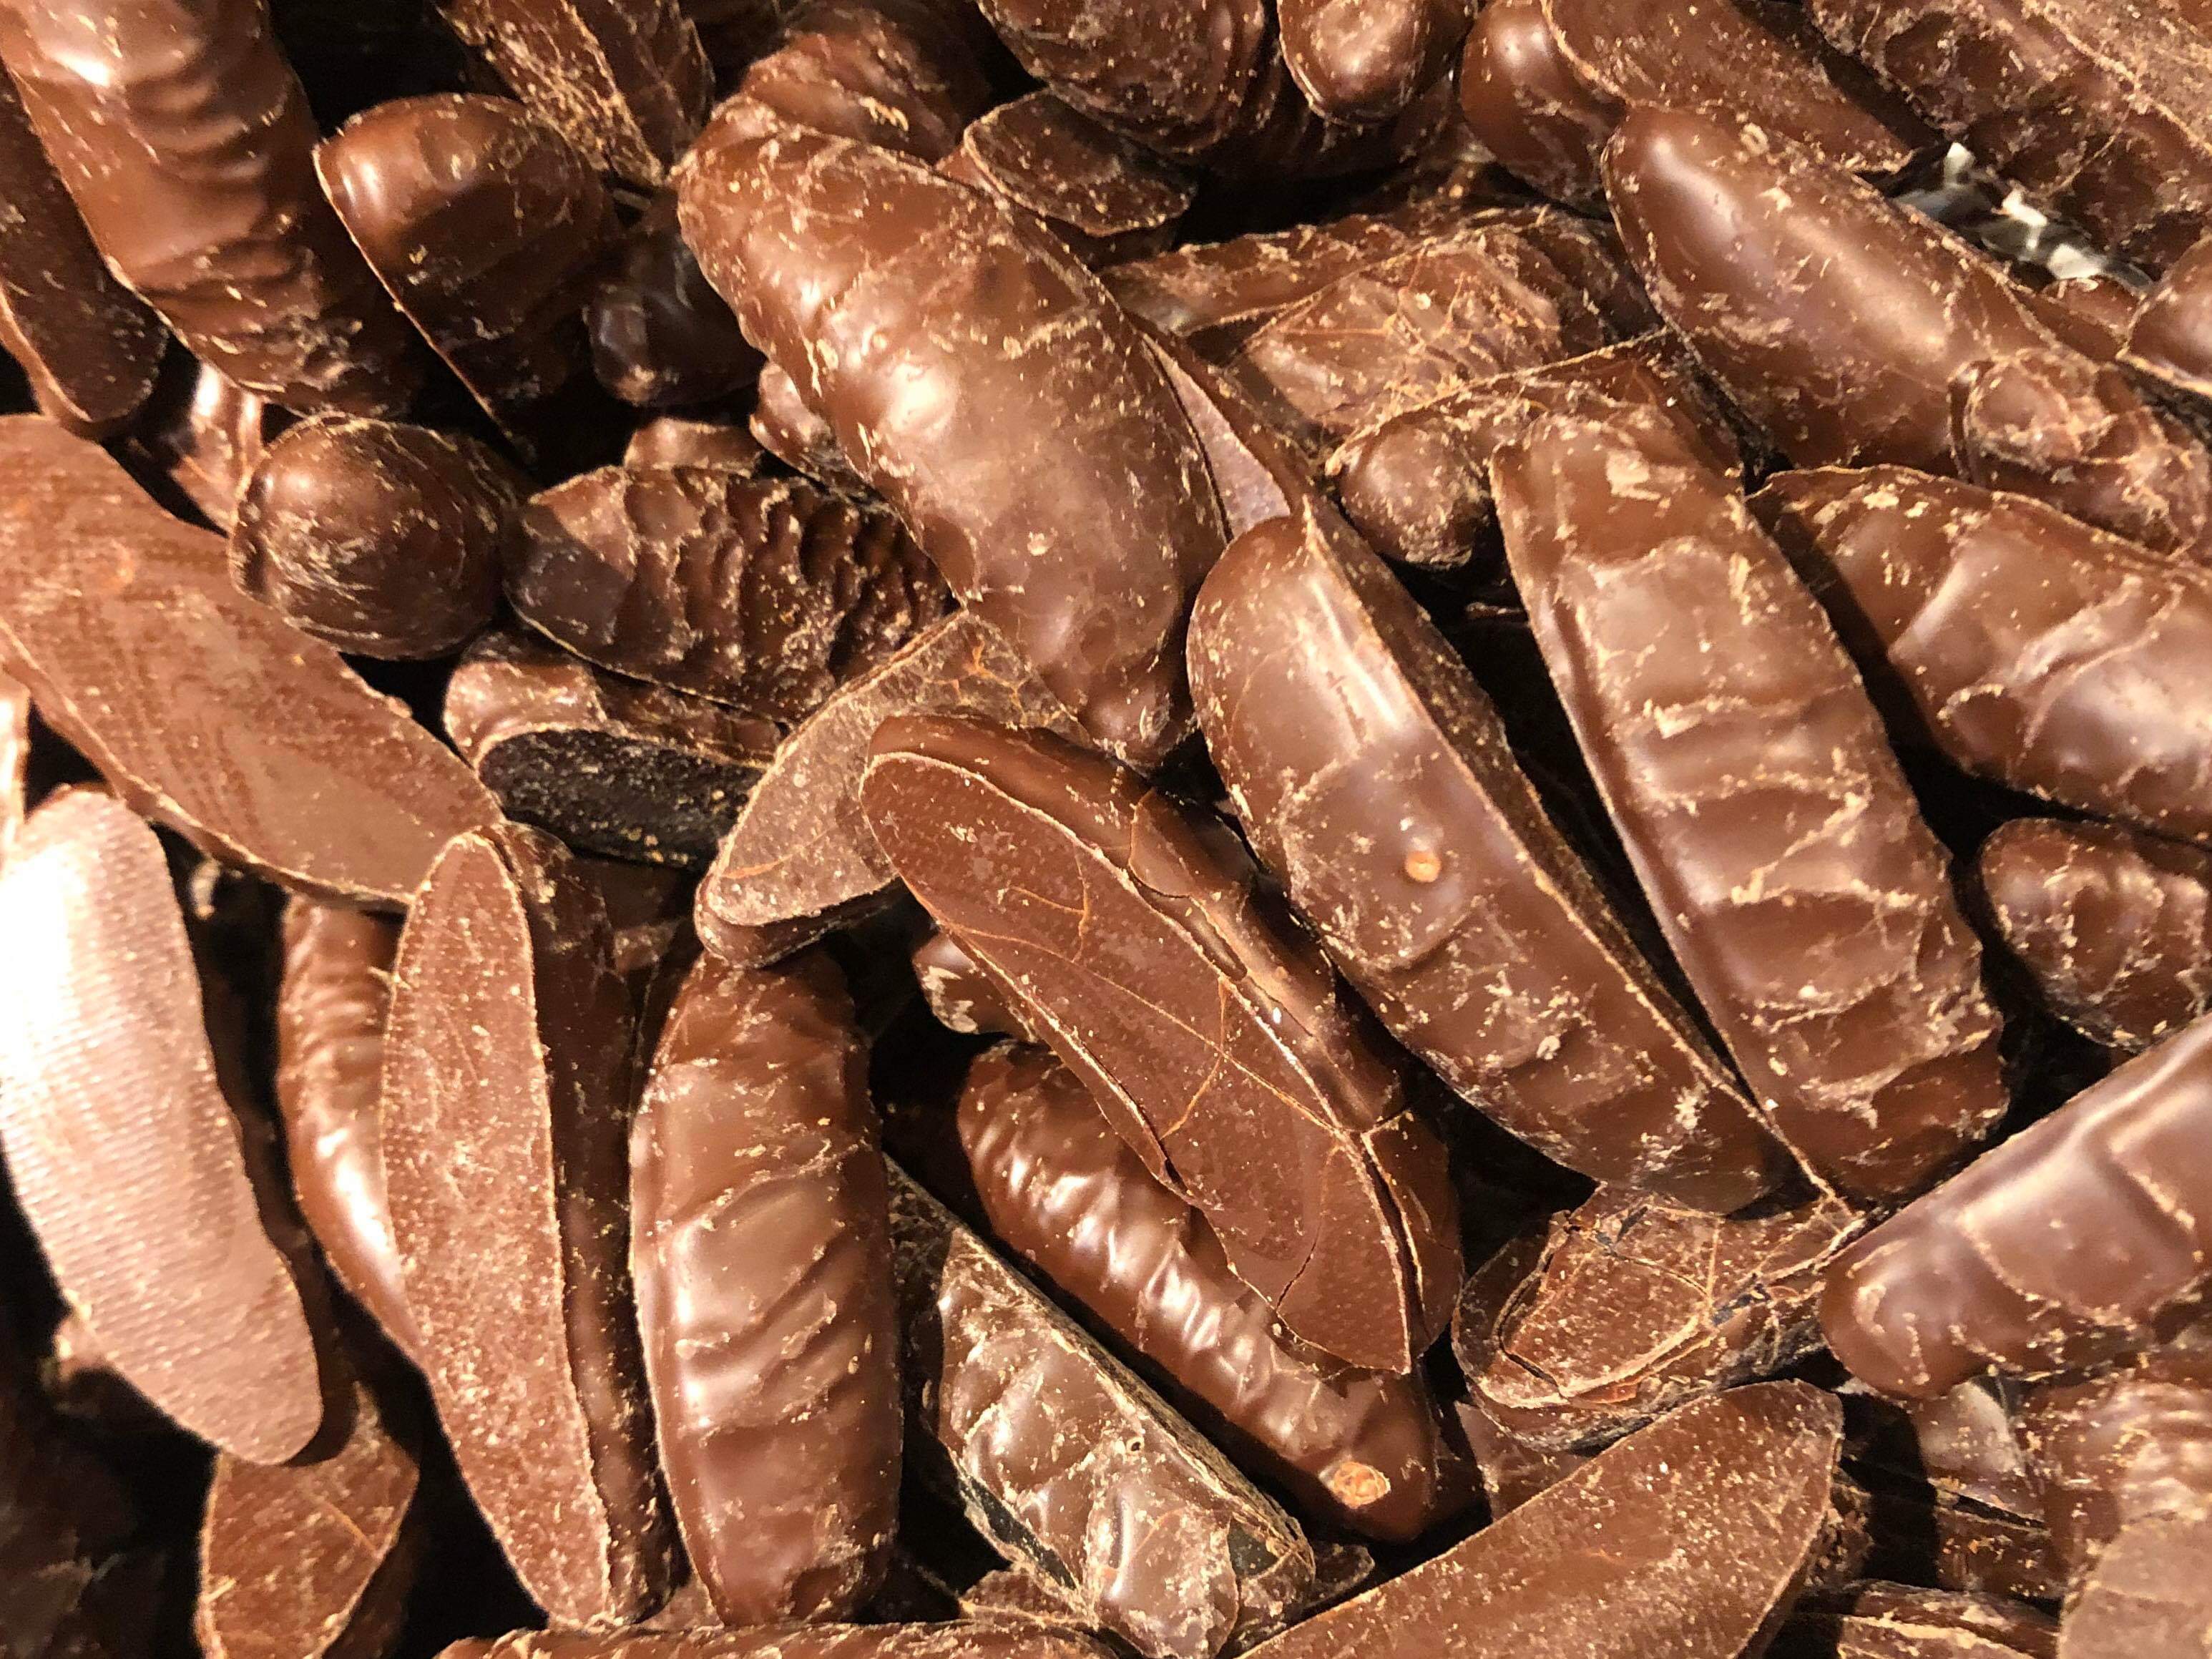 Banangele chokladdoppad